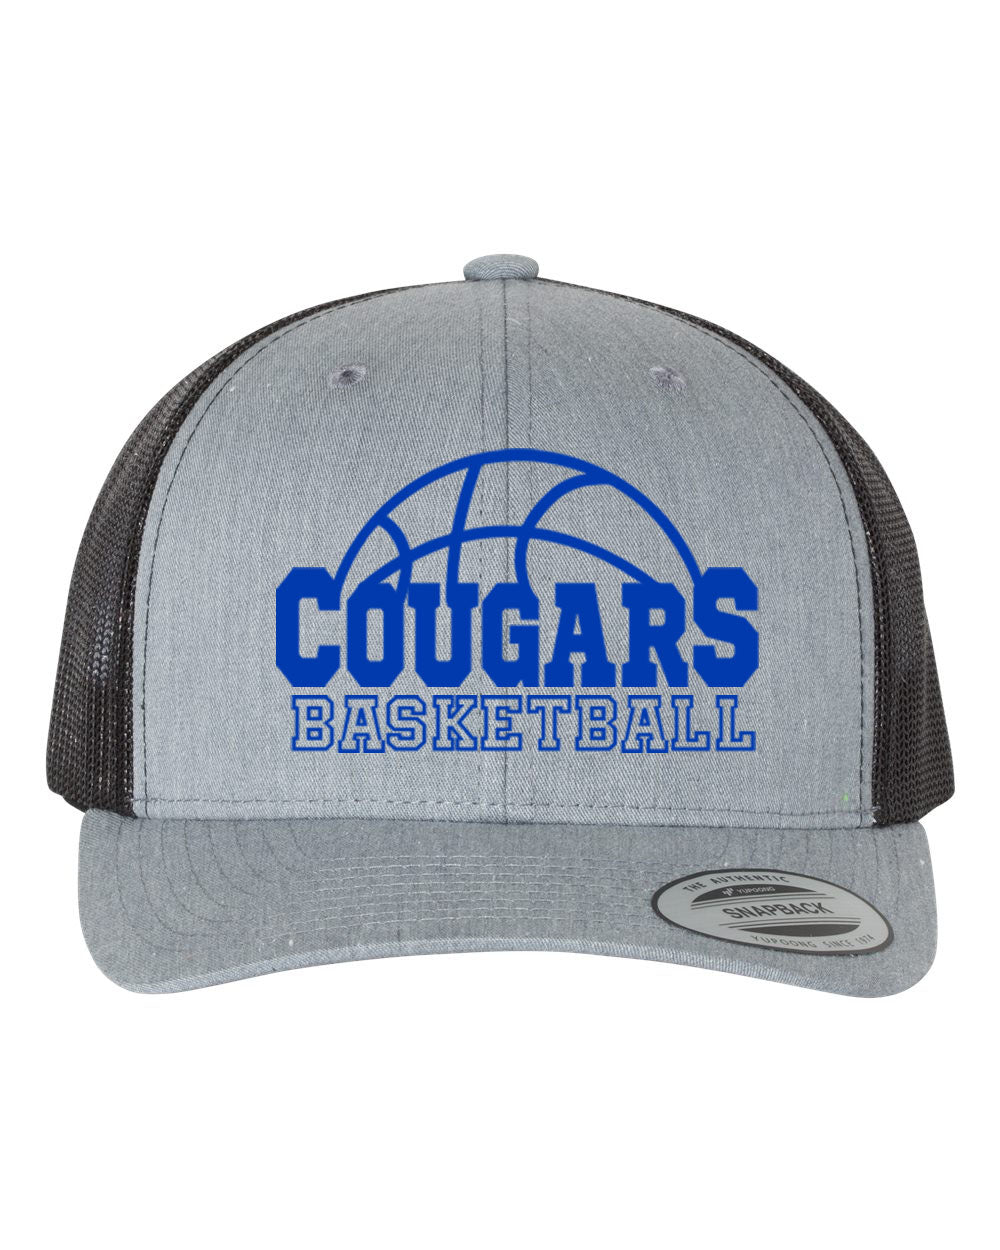 Kittatinny Basketball Design 2 Trucker Hat